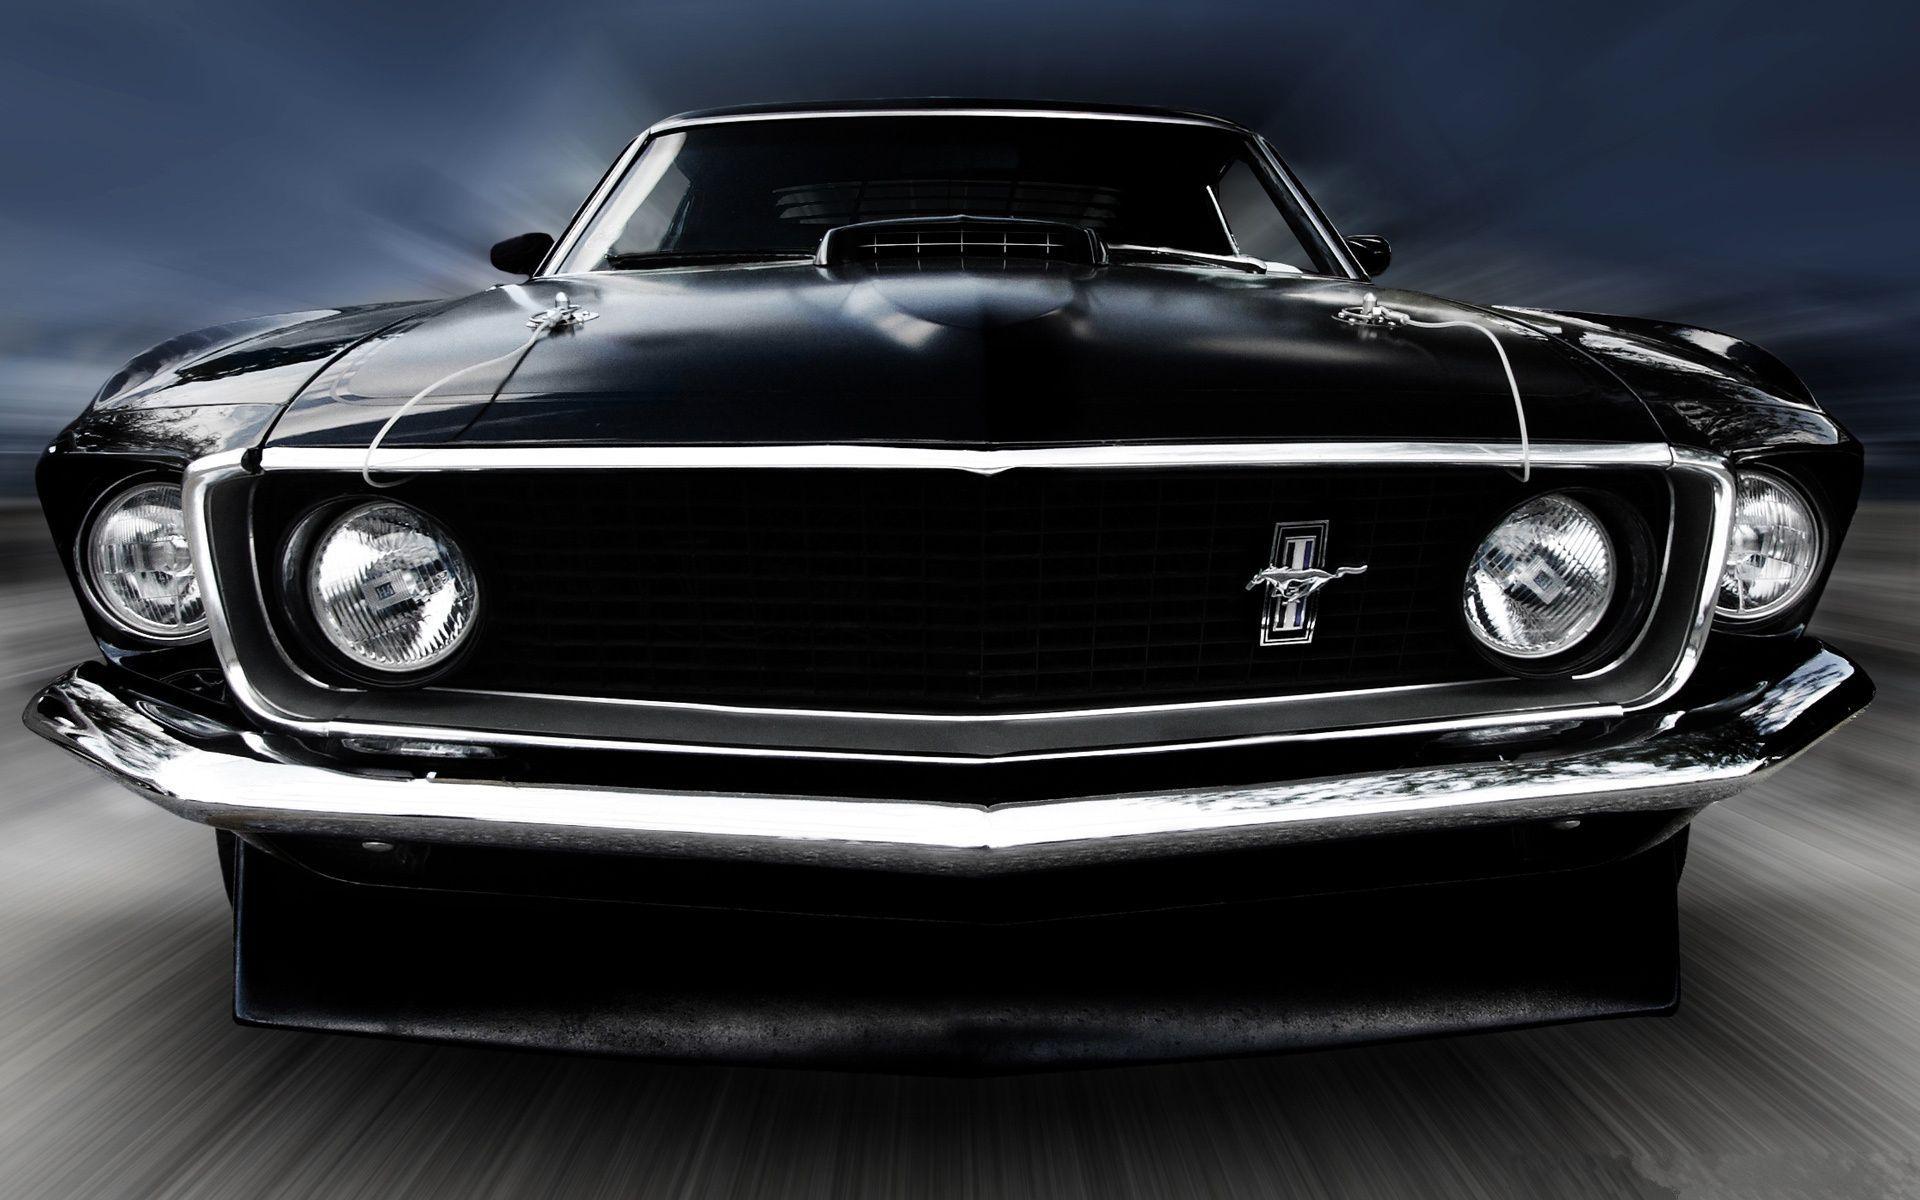 Ford Mustang Black Front HD Wallpaper. Como comprar um